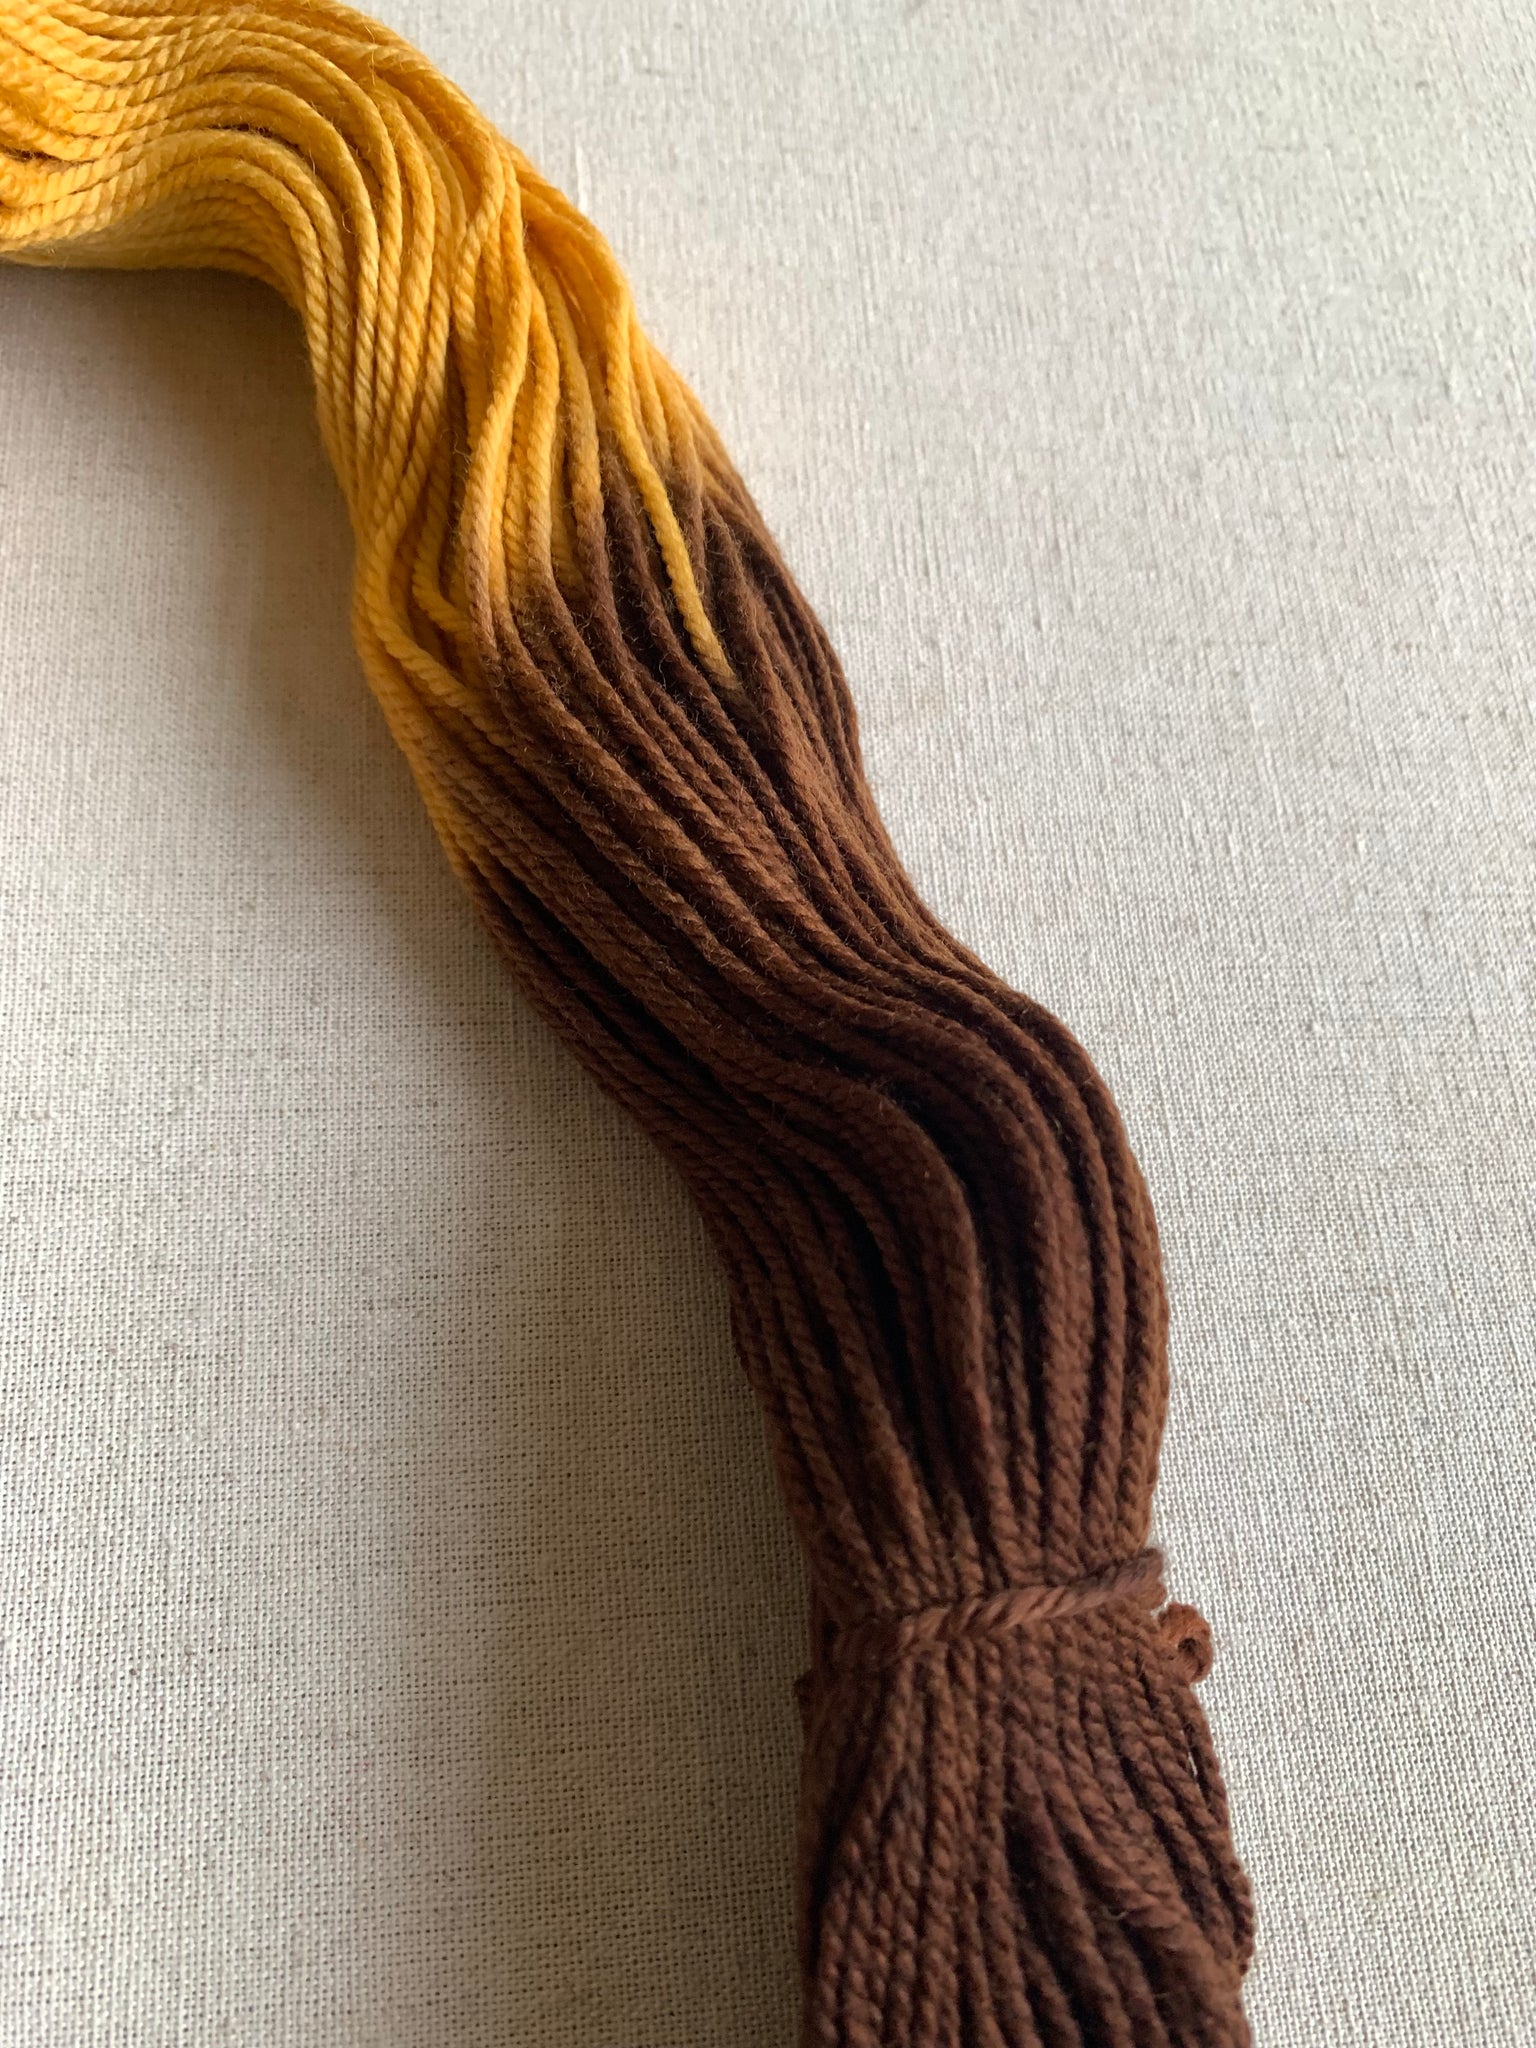 The Twist Hand Dyed Superwash 100% Merino Wool DK Yarn – Yarntuary